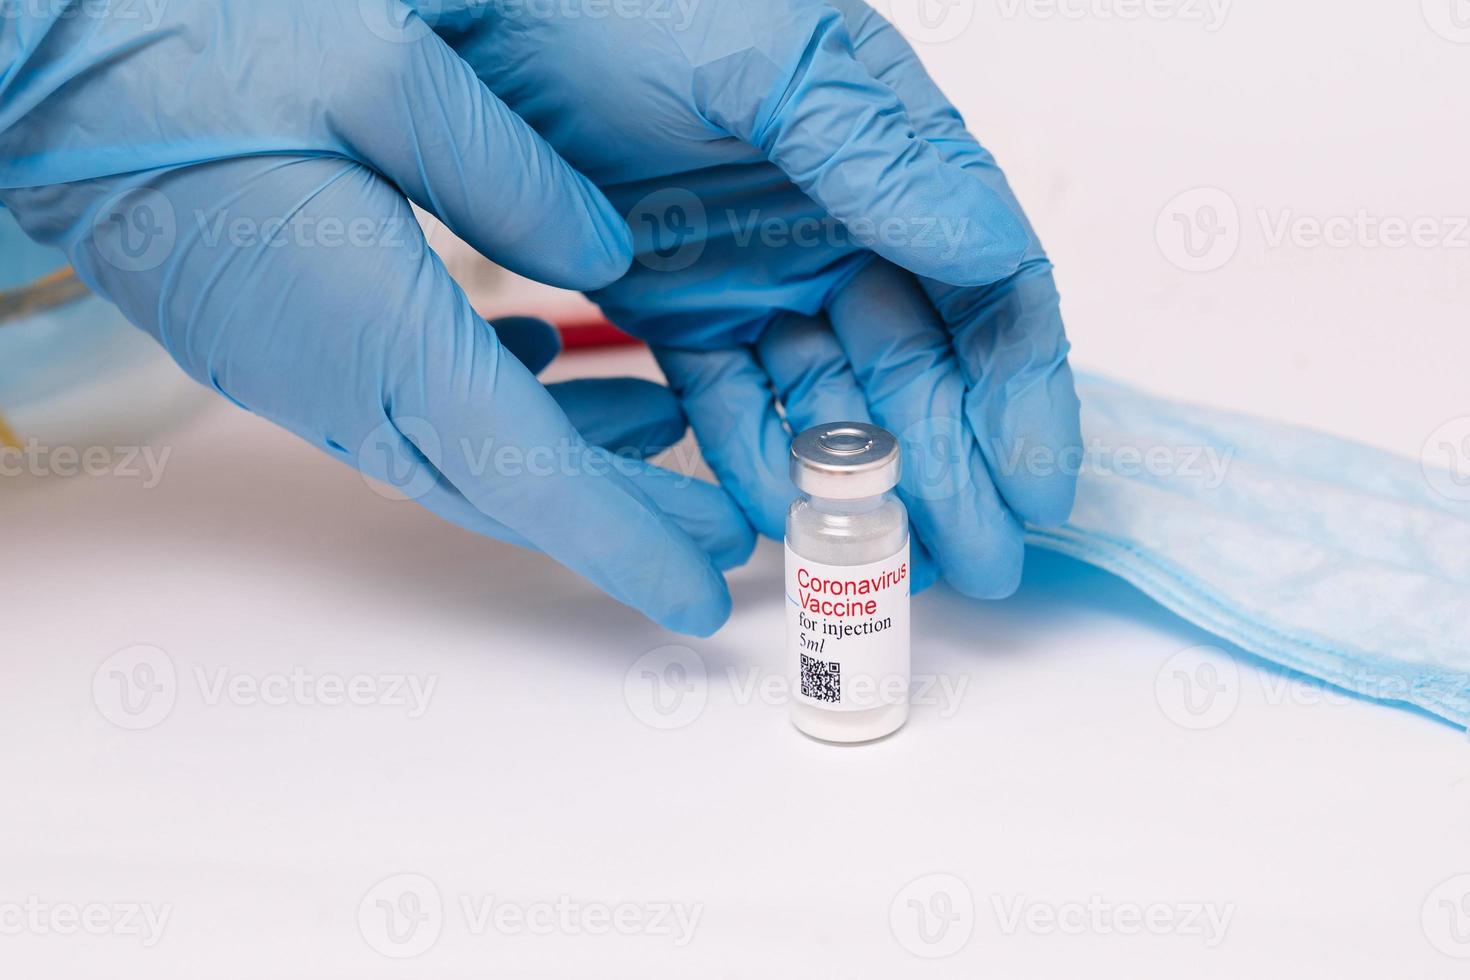 Coronavirus vaccine. Doctor with a vaccine. Hands holding a coronavirus vaccine ampoule, Covid-19 photo